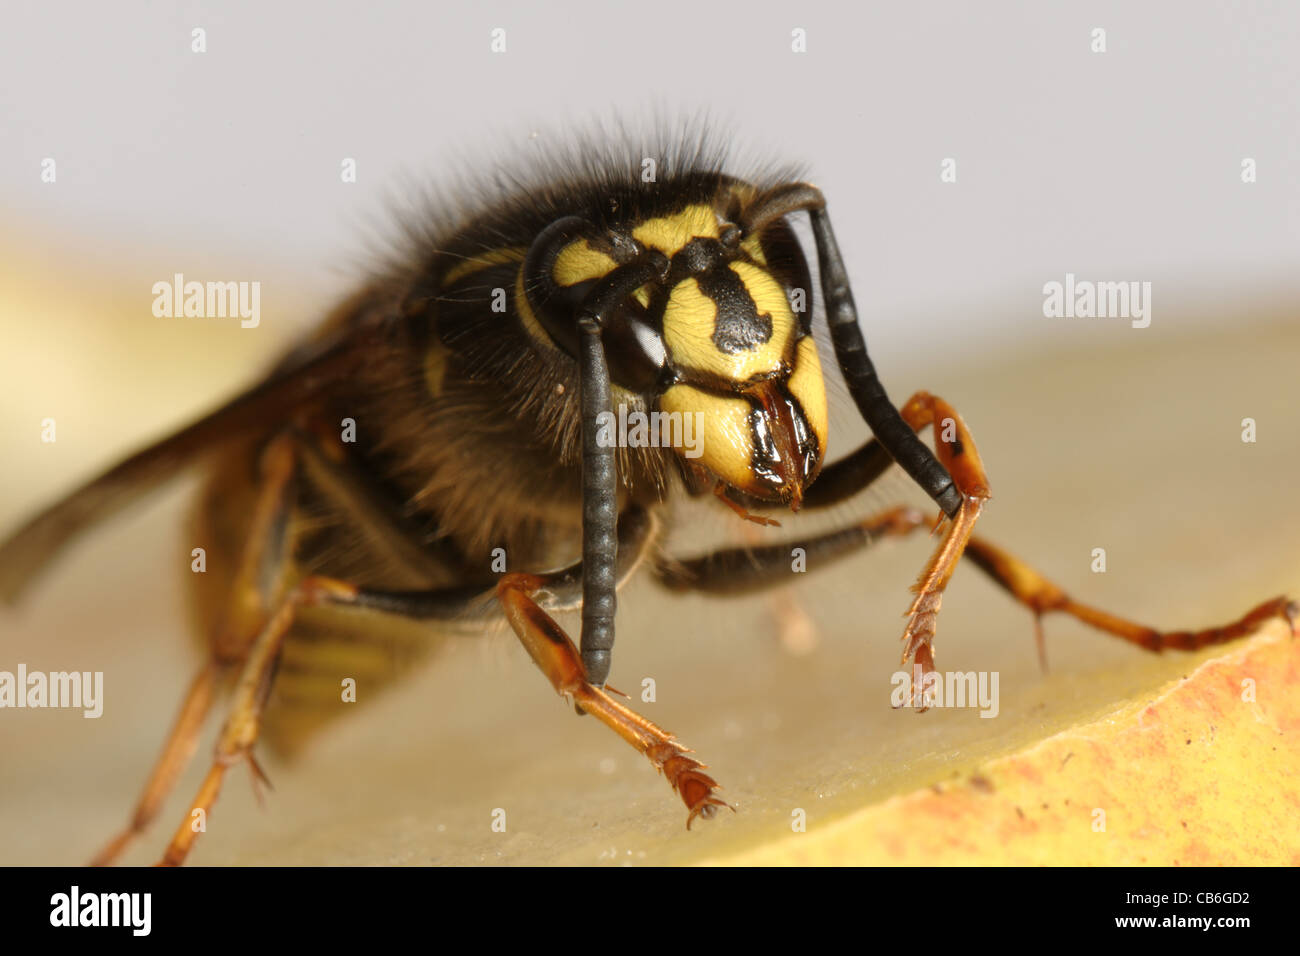 Wasp (Vespula vulgaris) on an apple cleaning its antennae Stock Photo